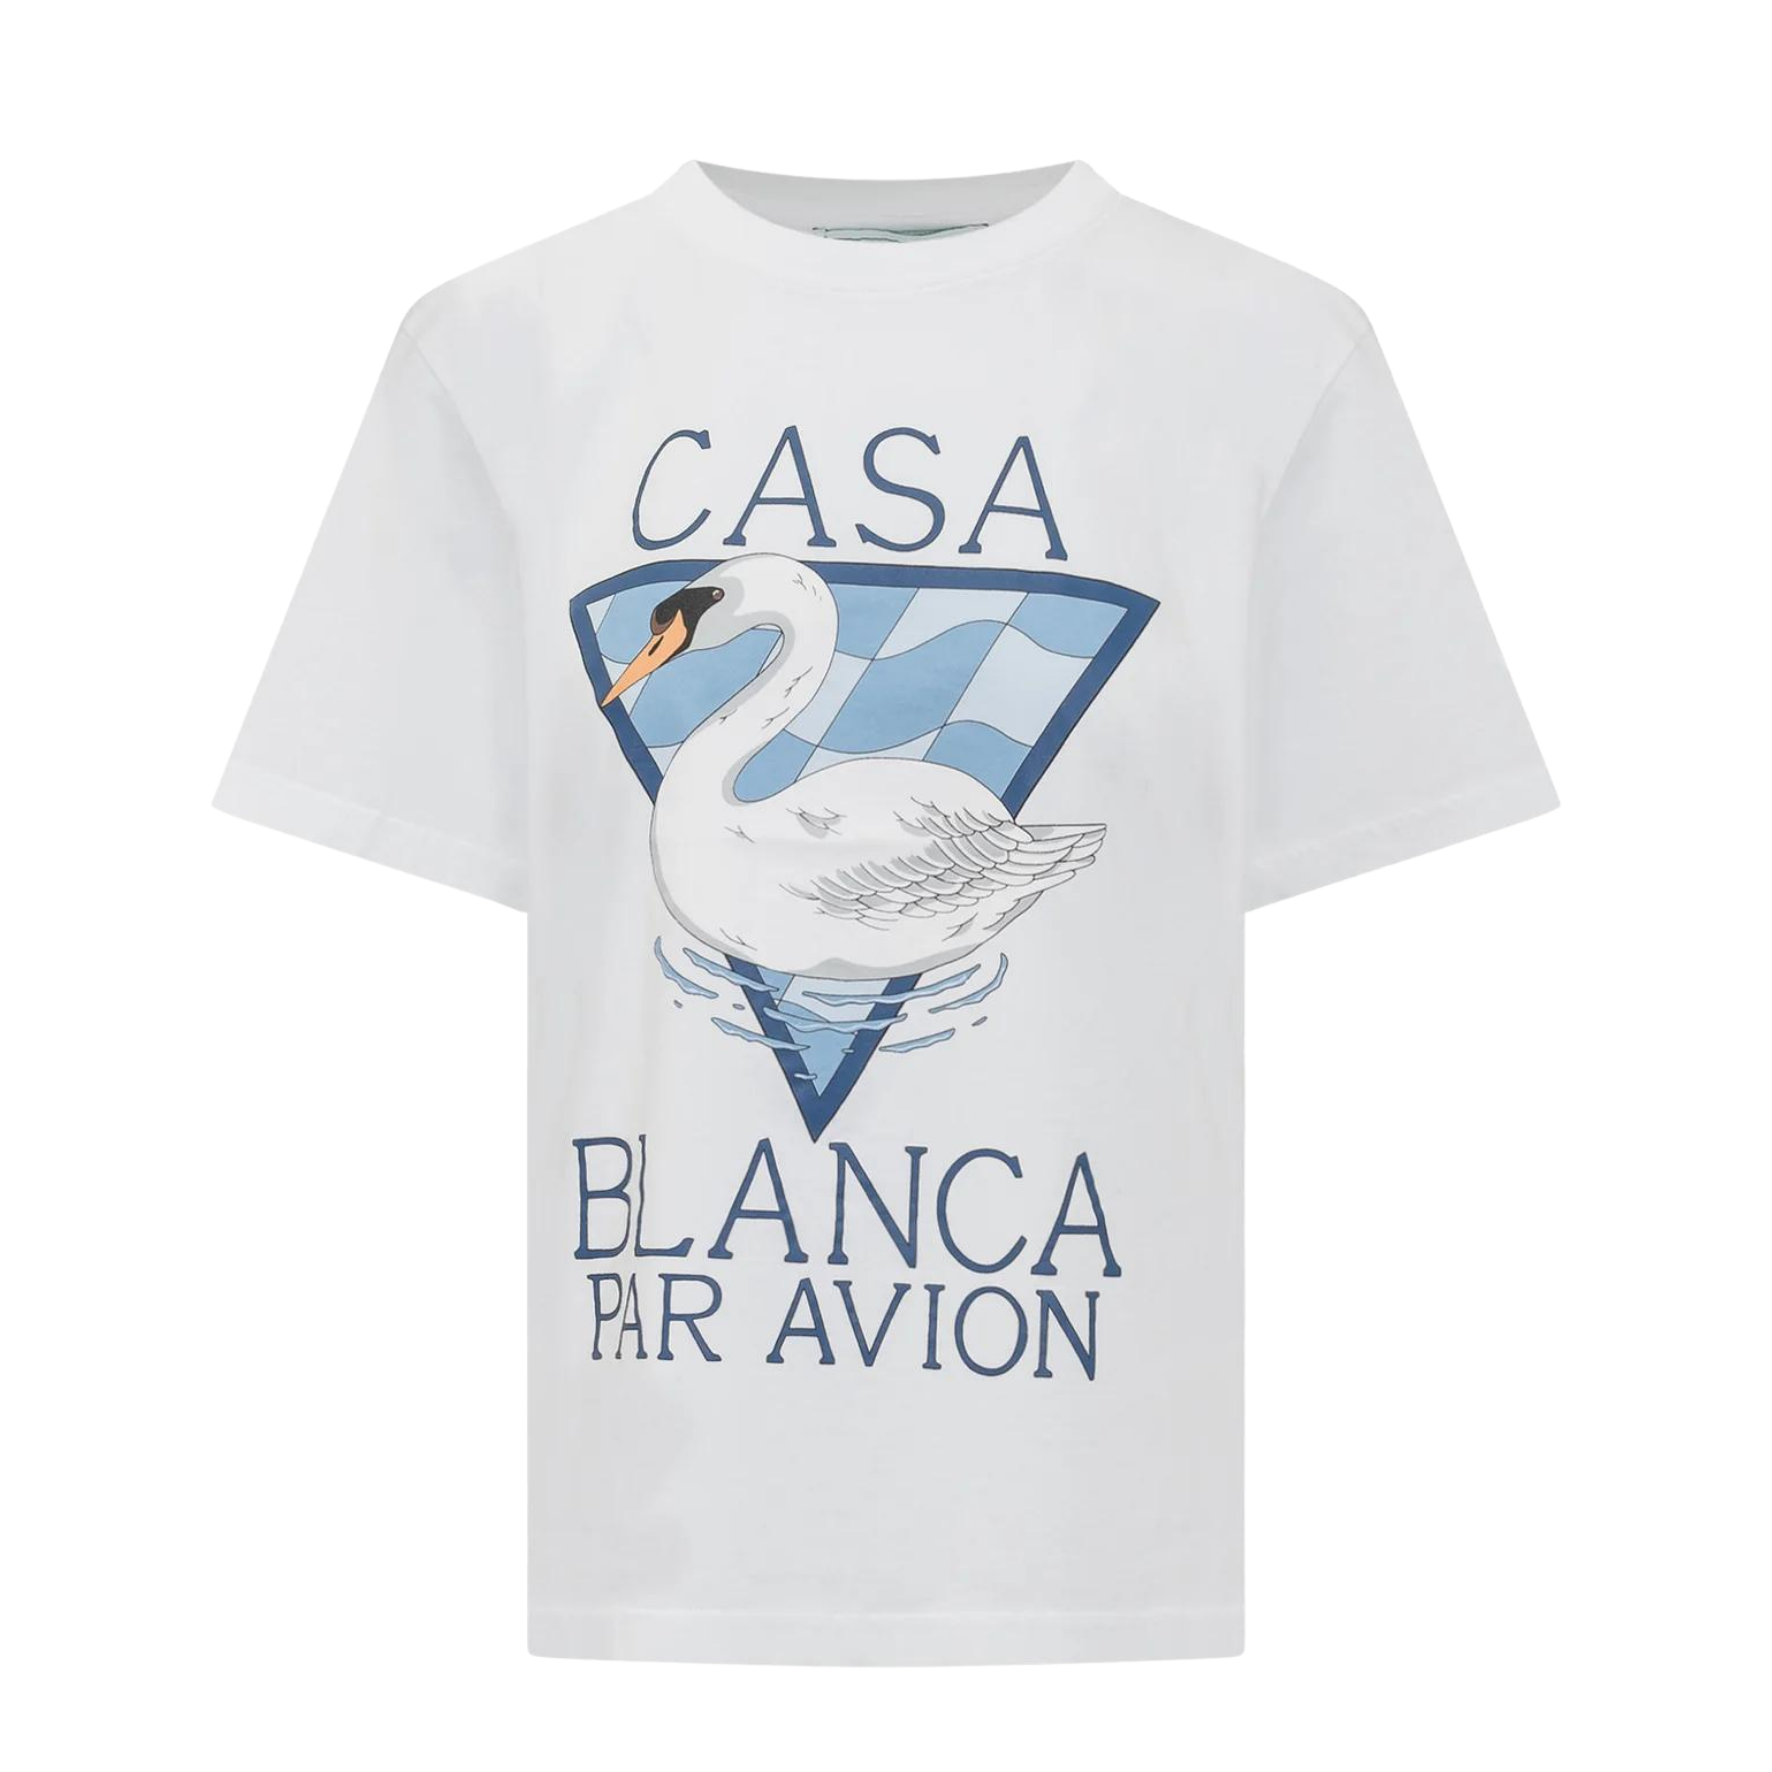 Casablanca Blanca Par Avion